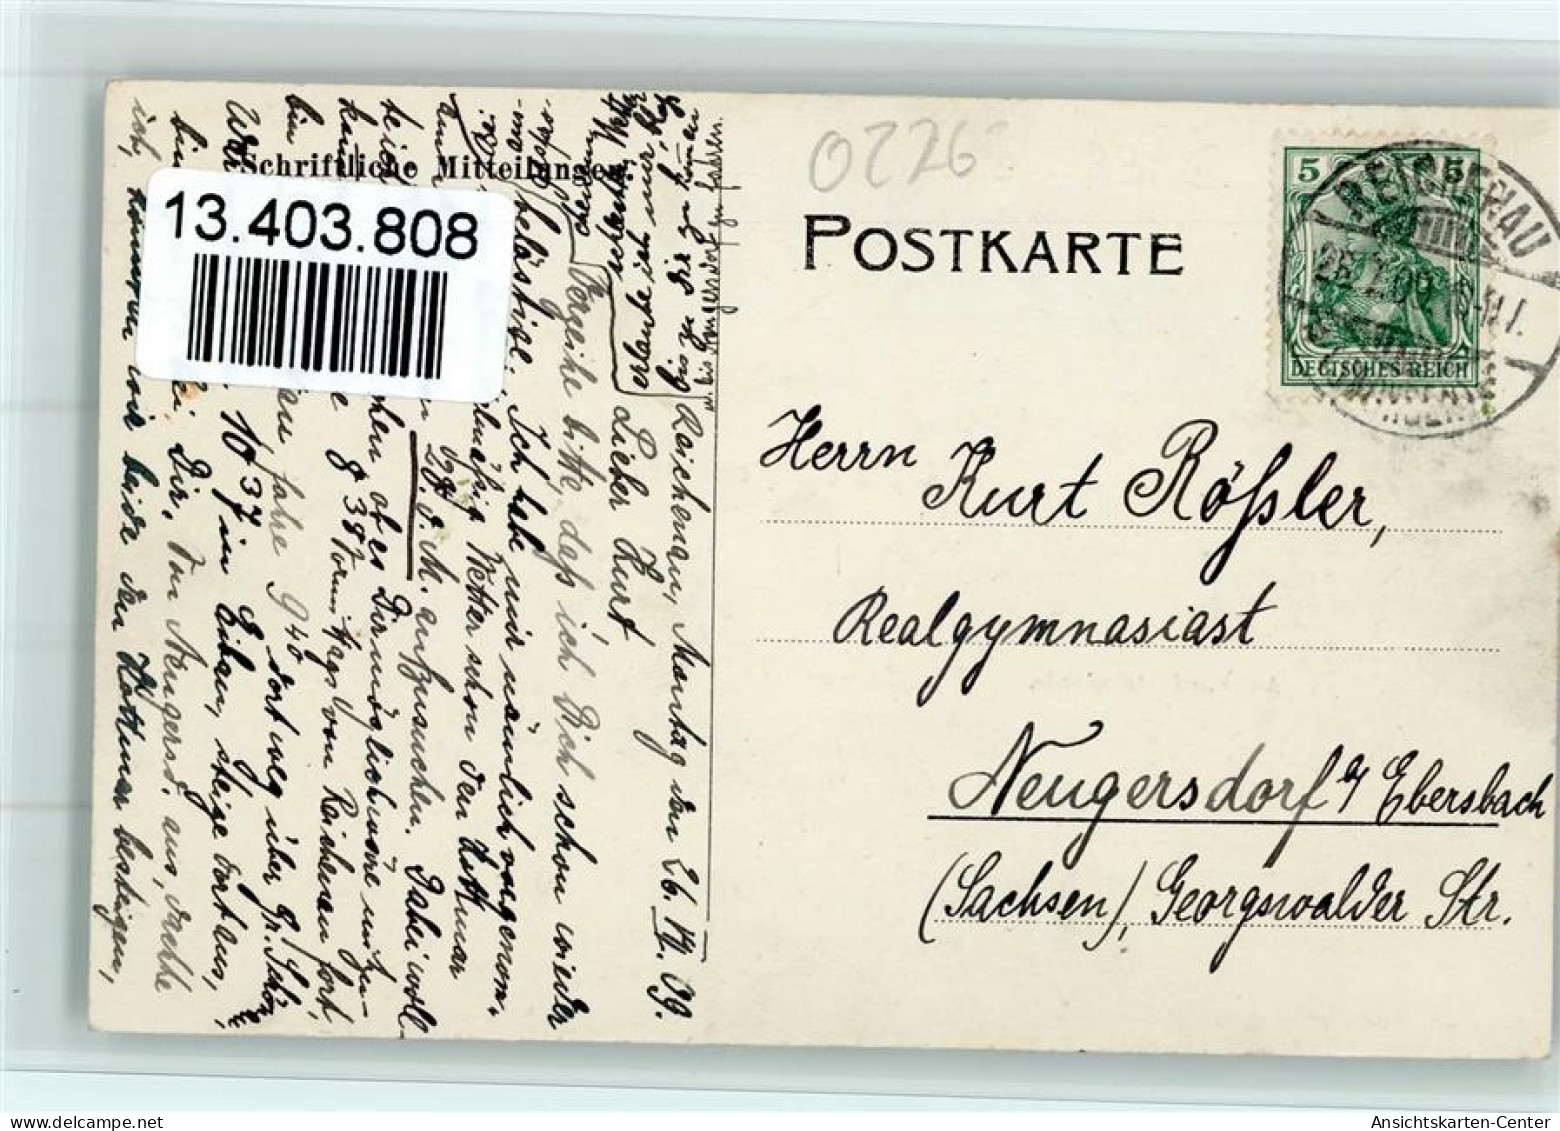 13403808 - Reichenau I. Sachsen - Zittau